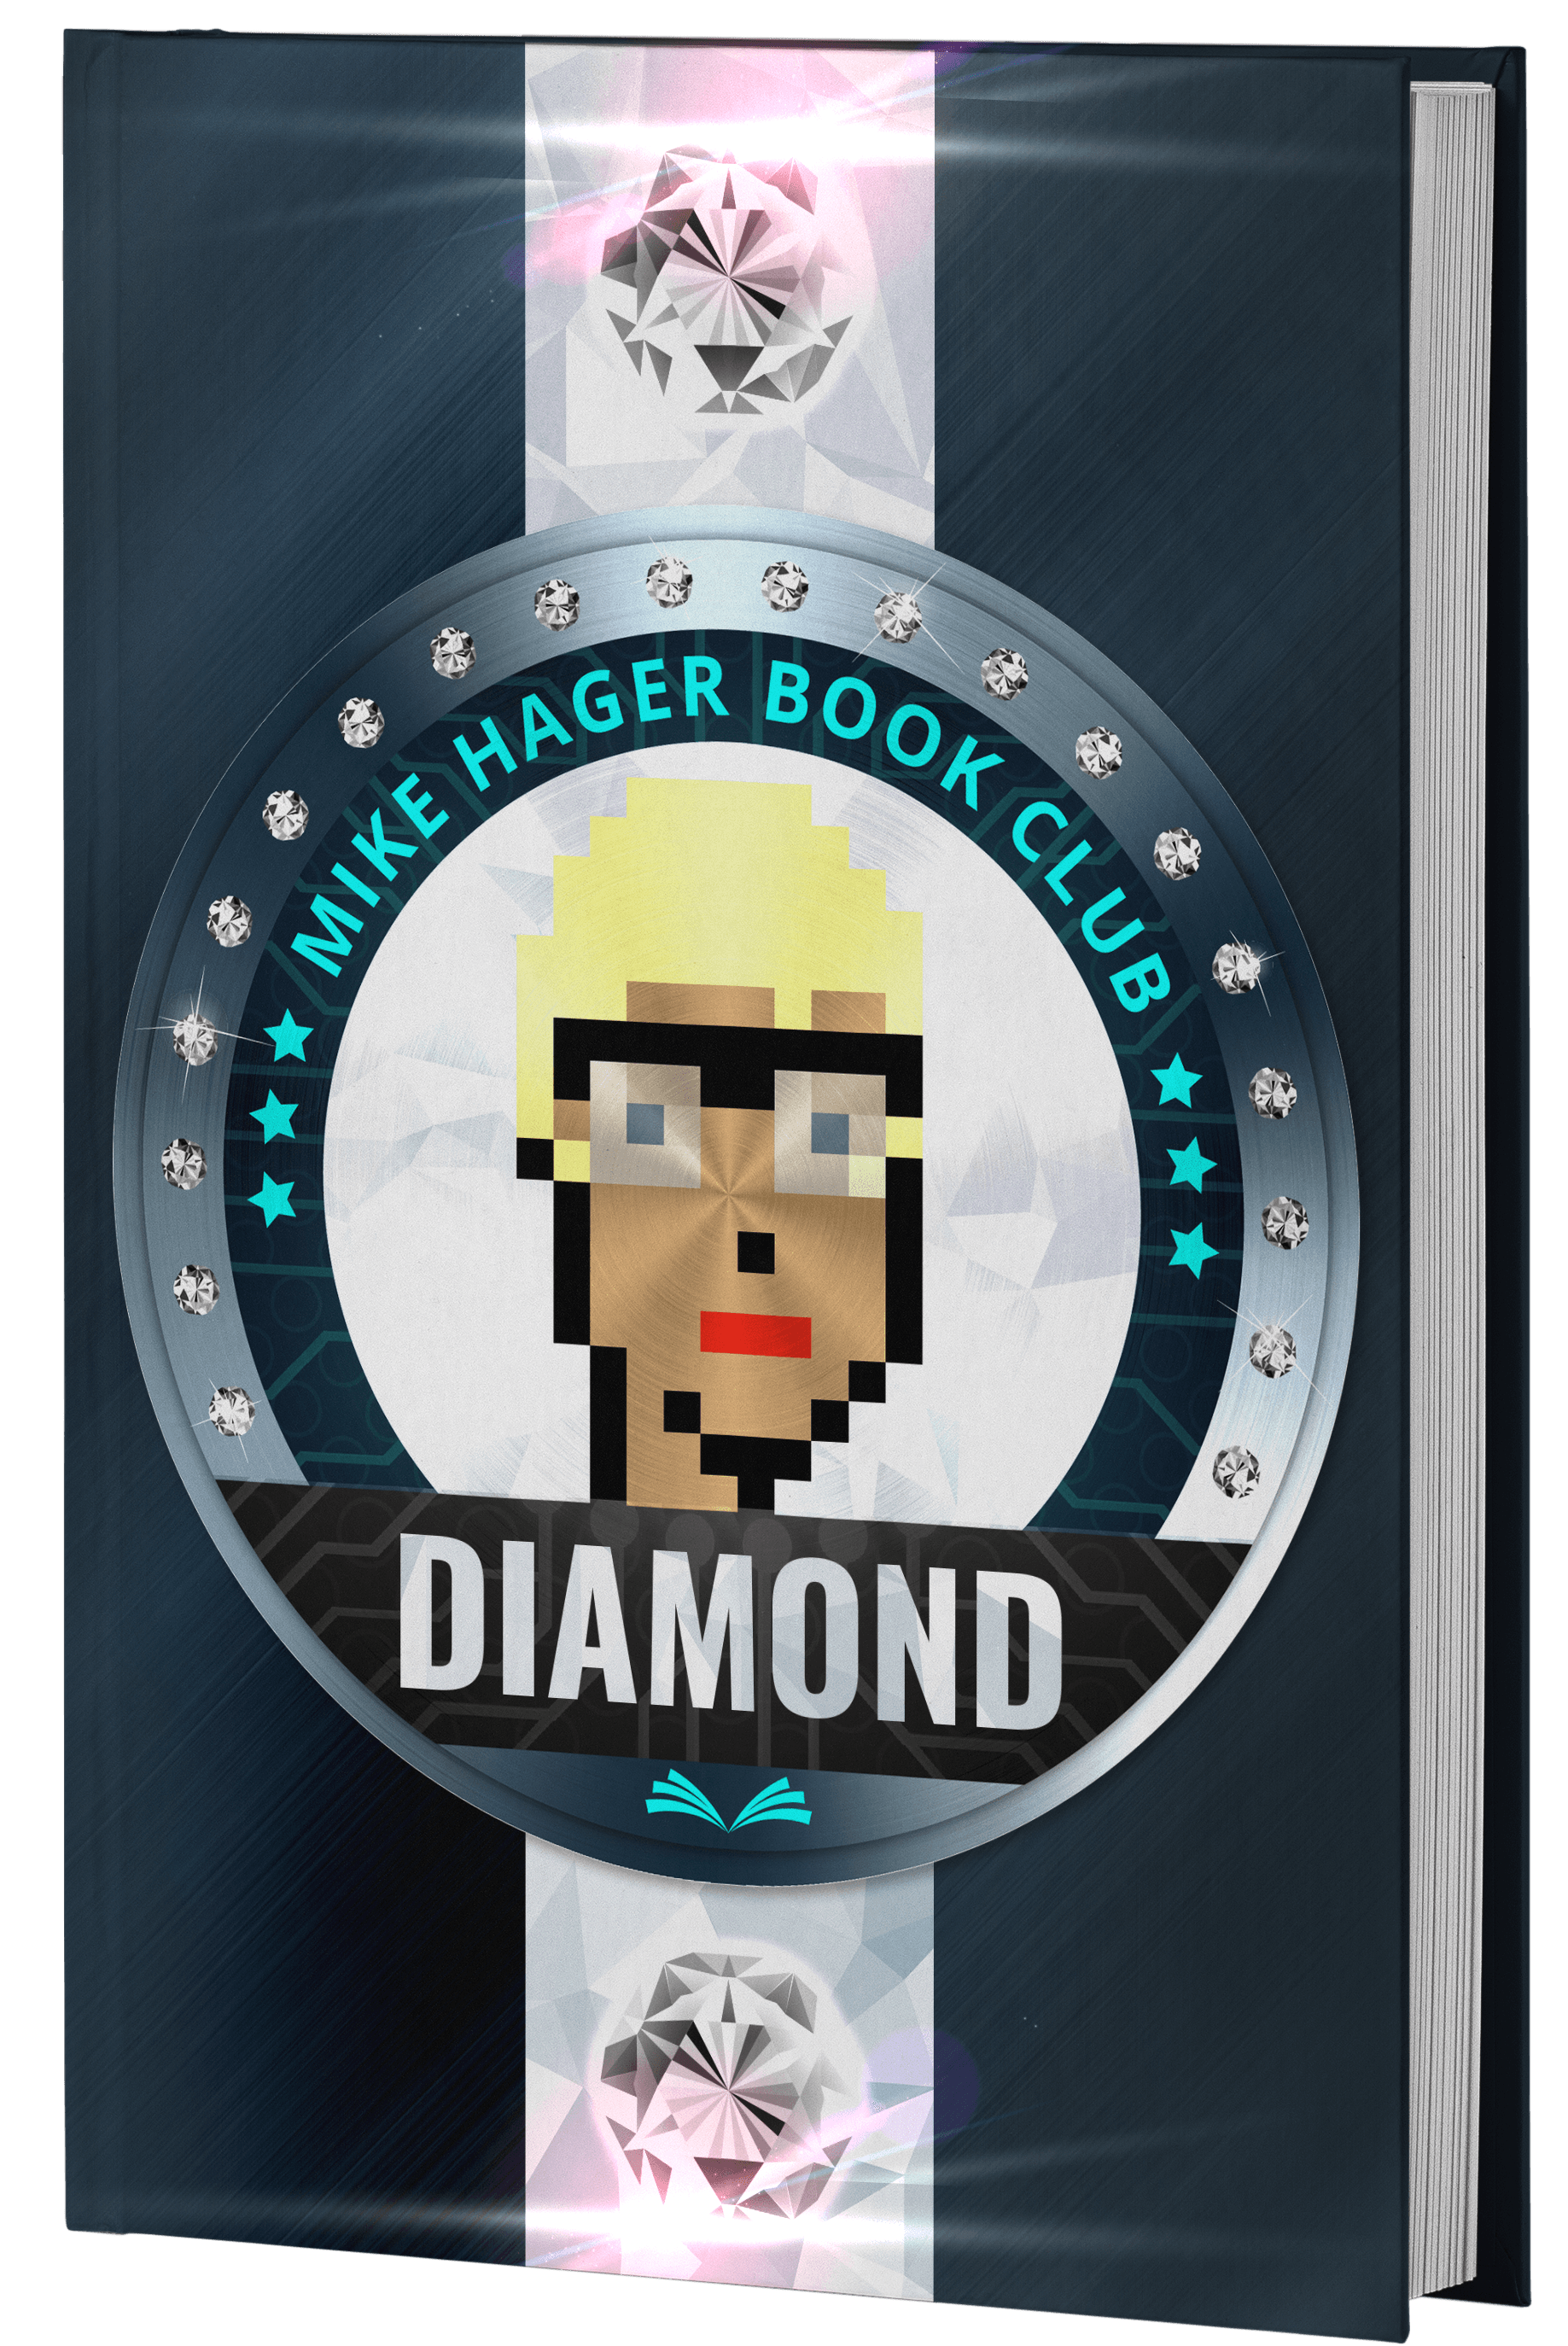 Mike Hager Book Club Diamond